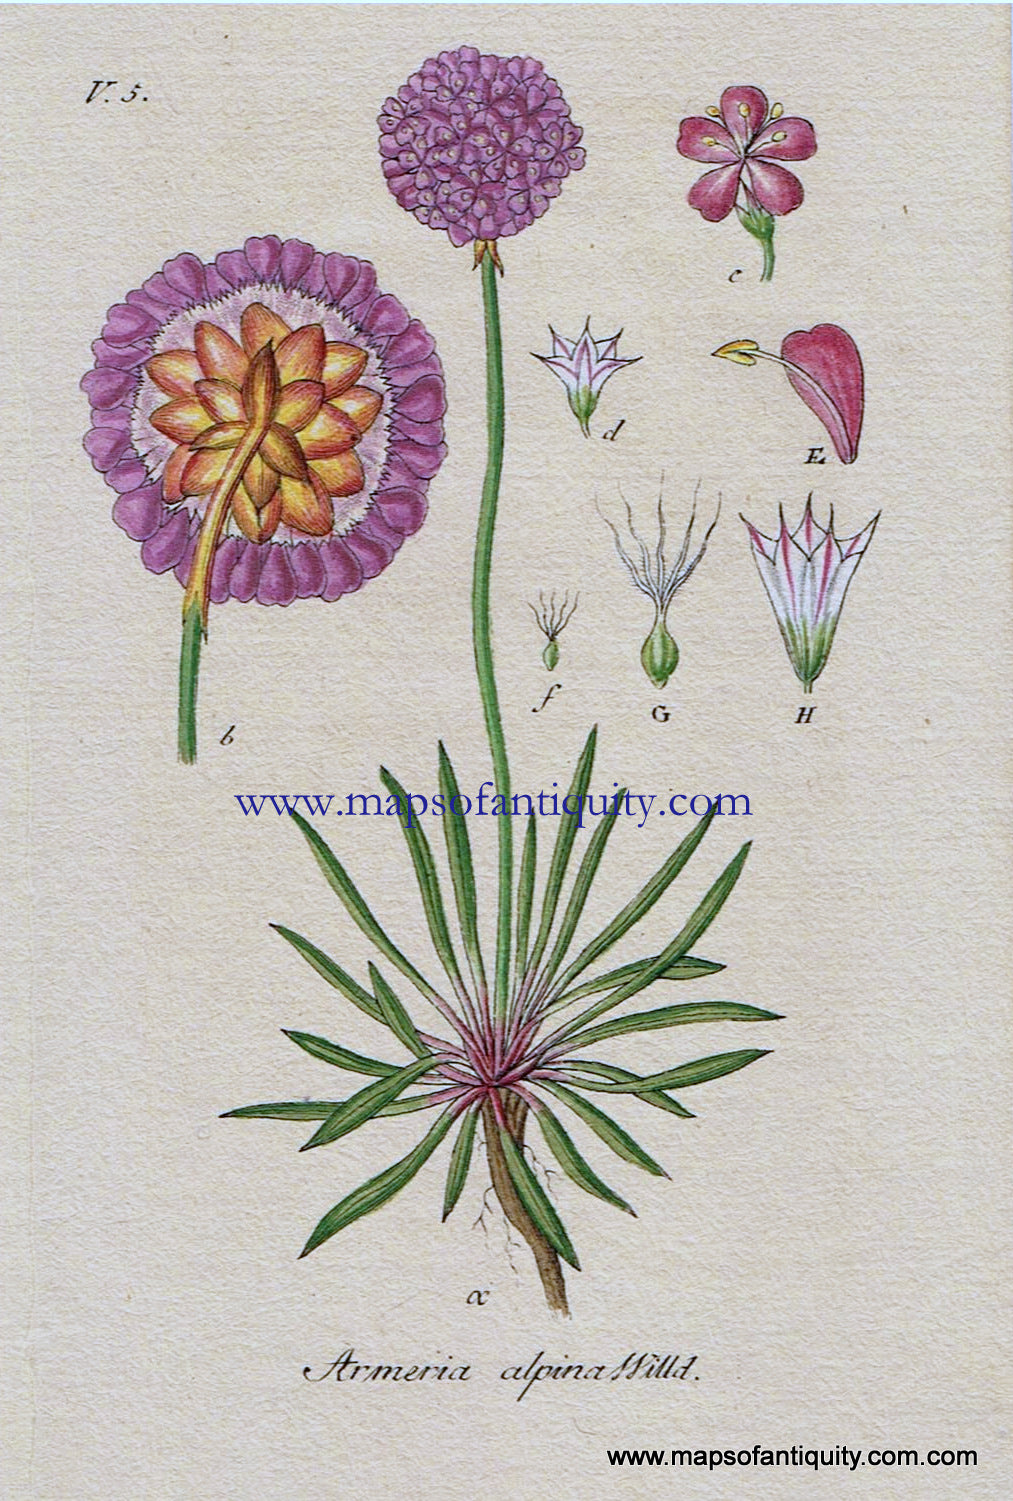 Antique-Hand-Colored-Botanical-Print-Armeria-alpina-Willd.-Or-mountain-thrift-Botanical-Illustration-Antique-Prints--Natural-History-Botanical-1828-Jacob-Sturm-Maps-Of-Antiquity